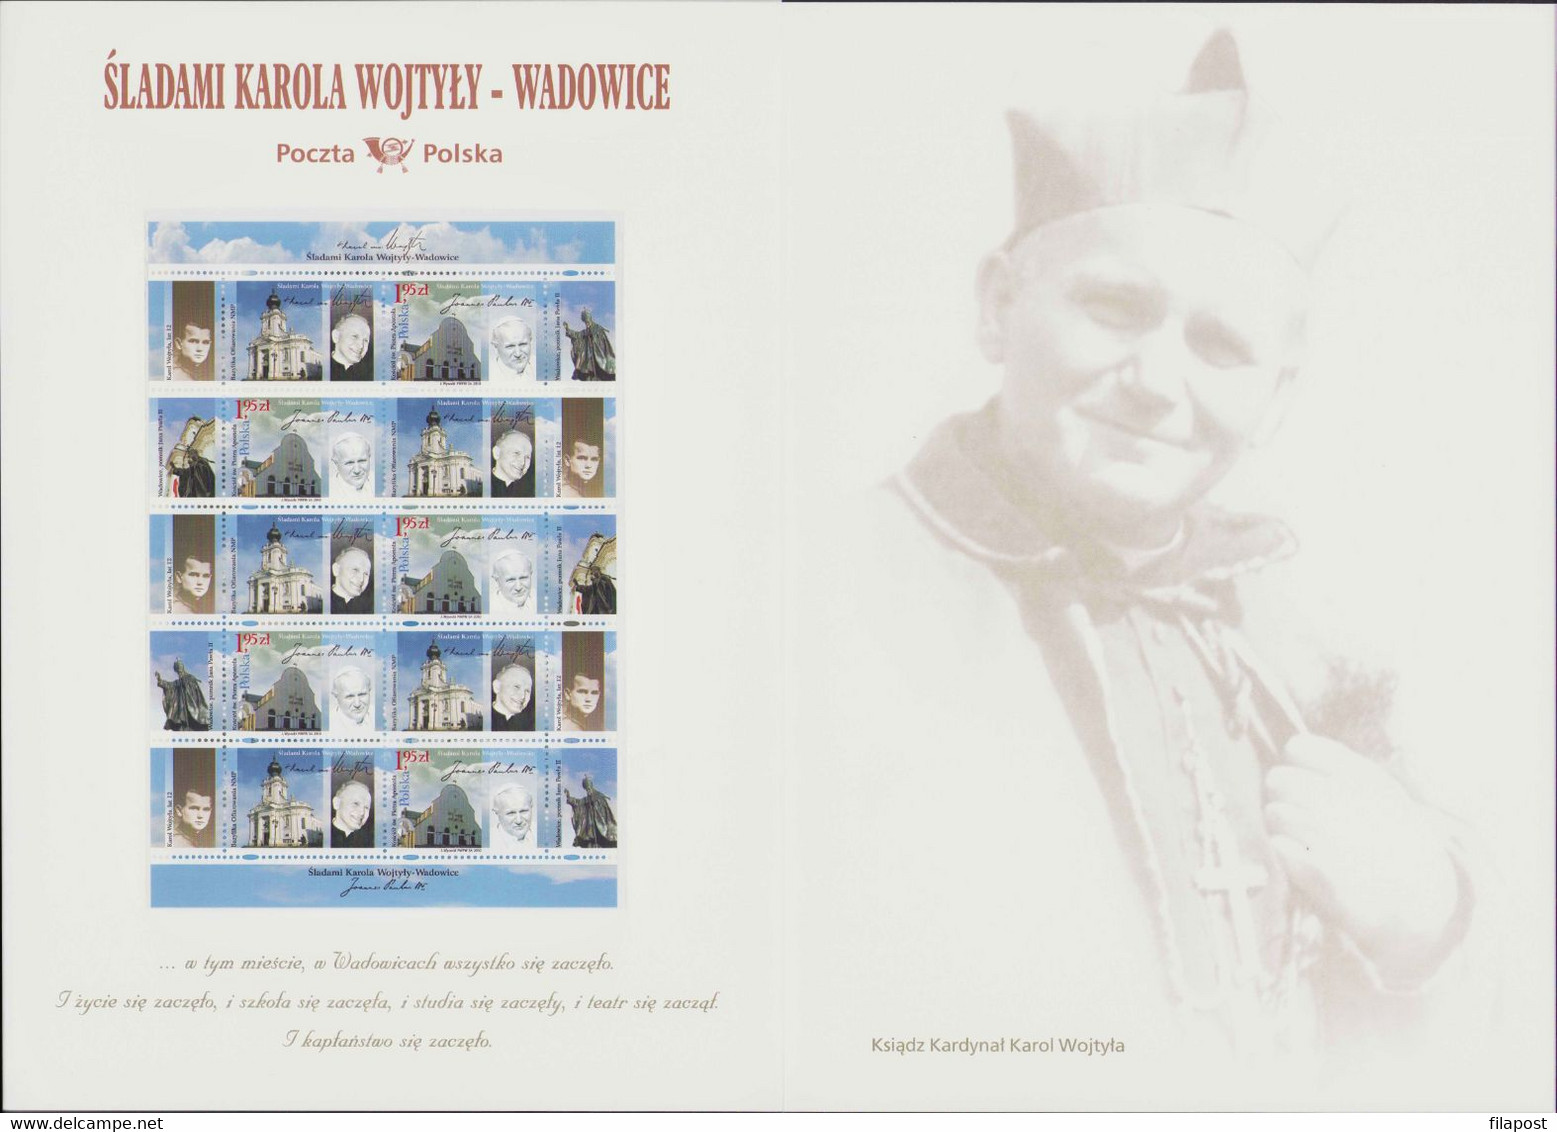 Poland 2010 Mi 4484 Souvenir Booklet / In The Steps Of Karol Wojtyla - Wadowice, Pope John Paul II / Full Sheet MNH**FV - Roulettes